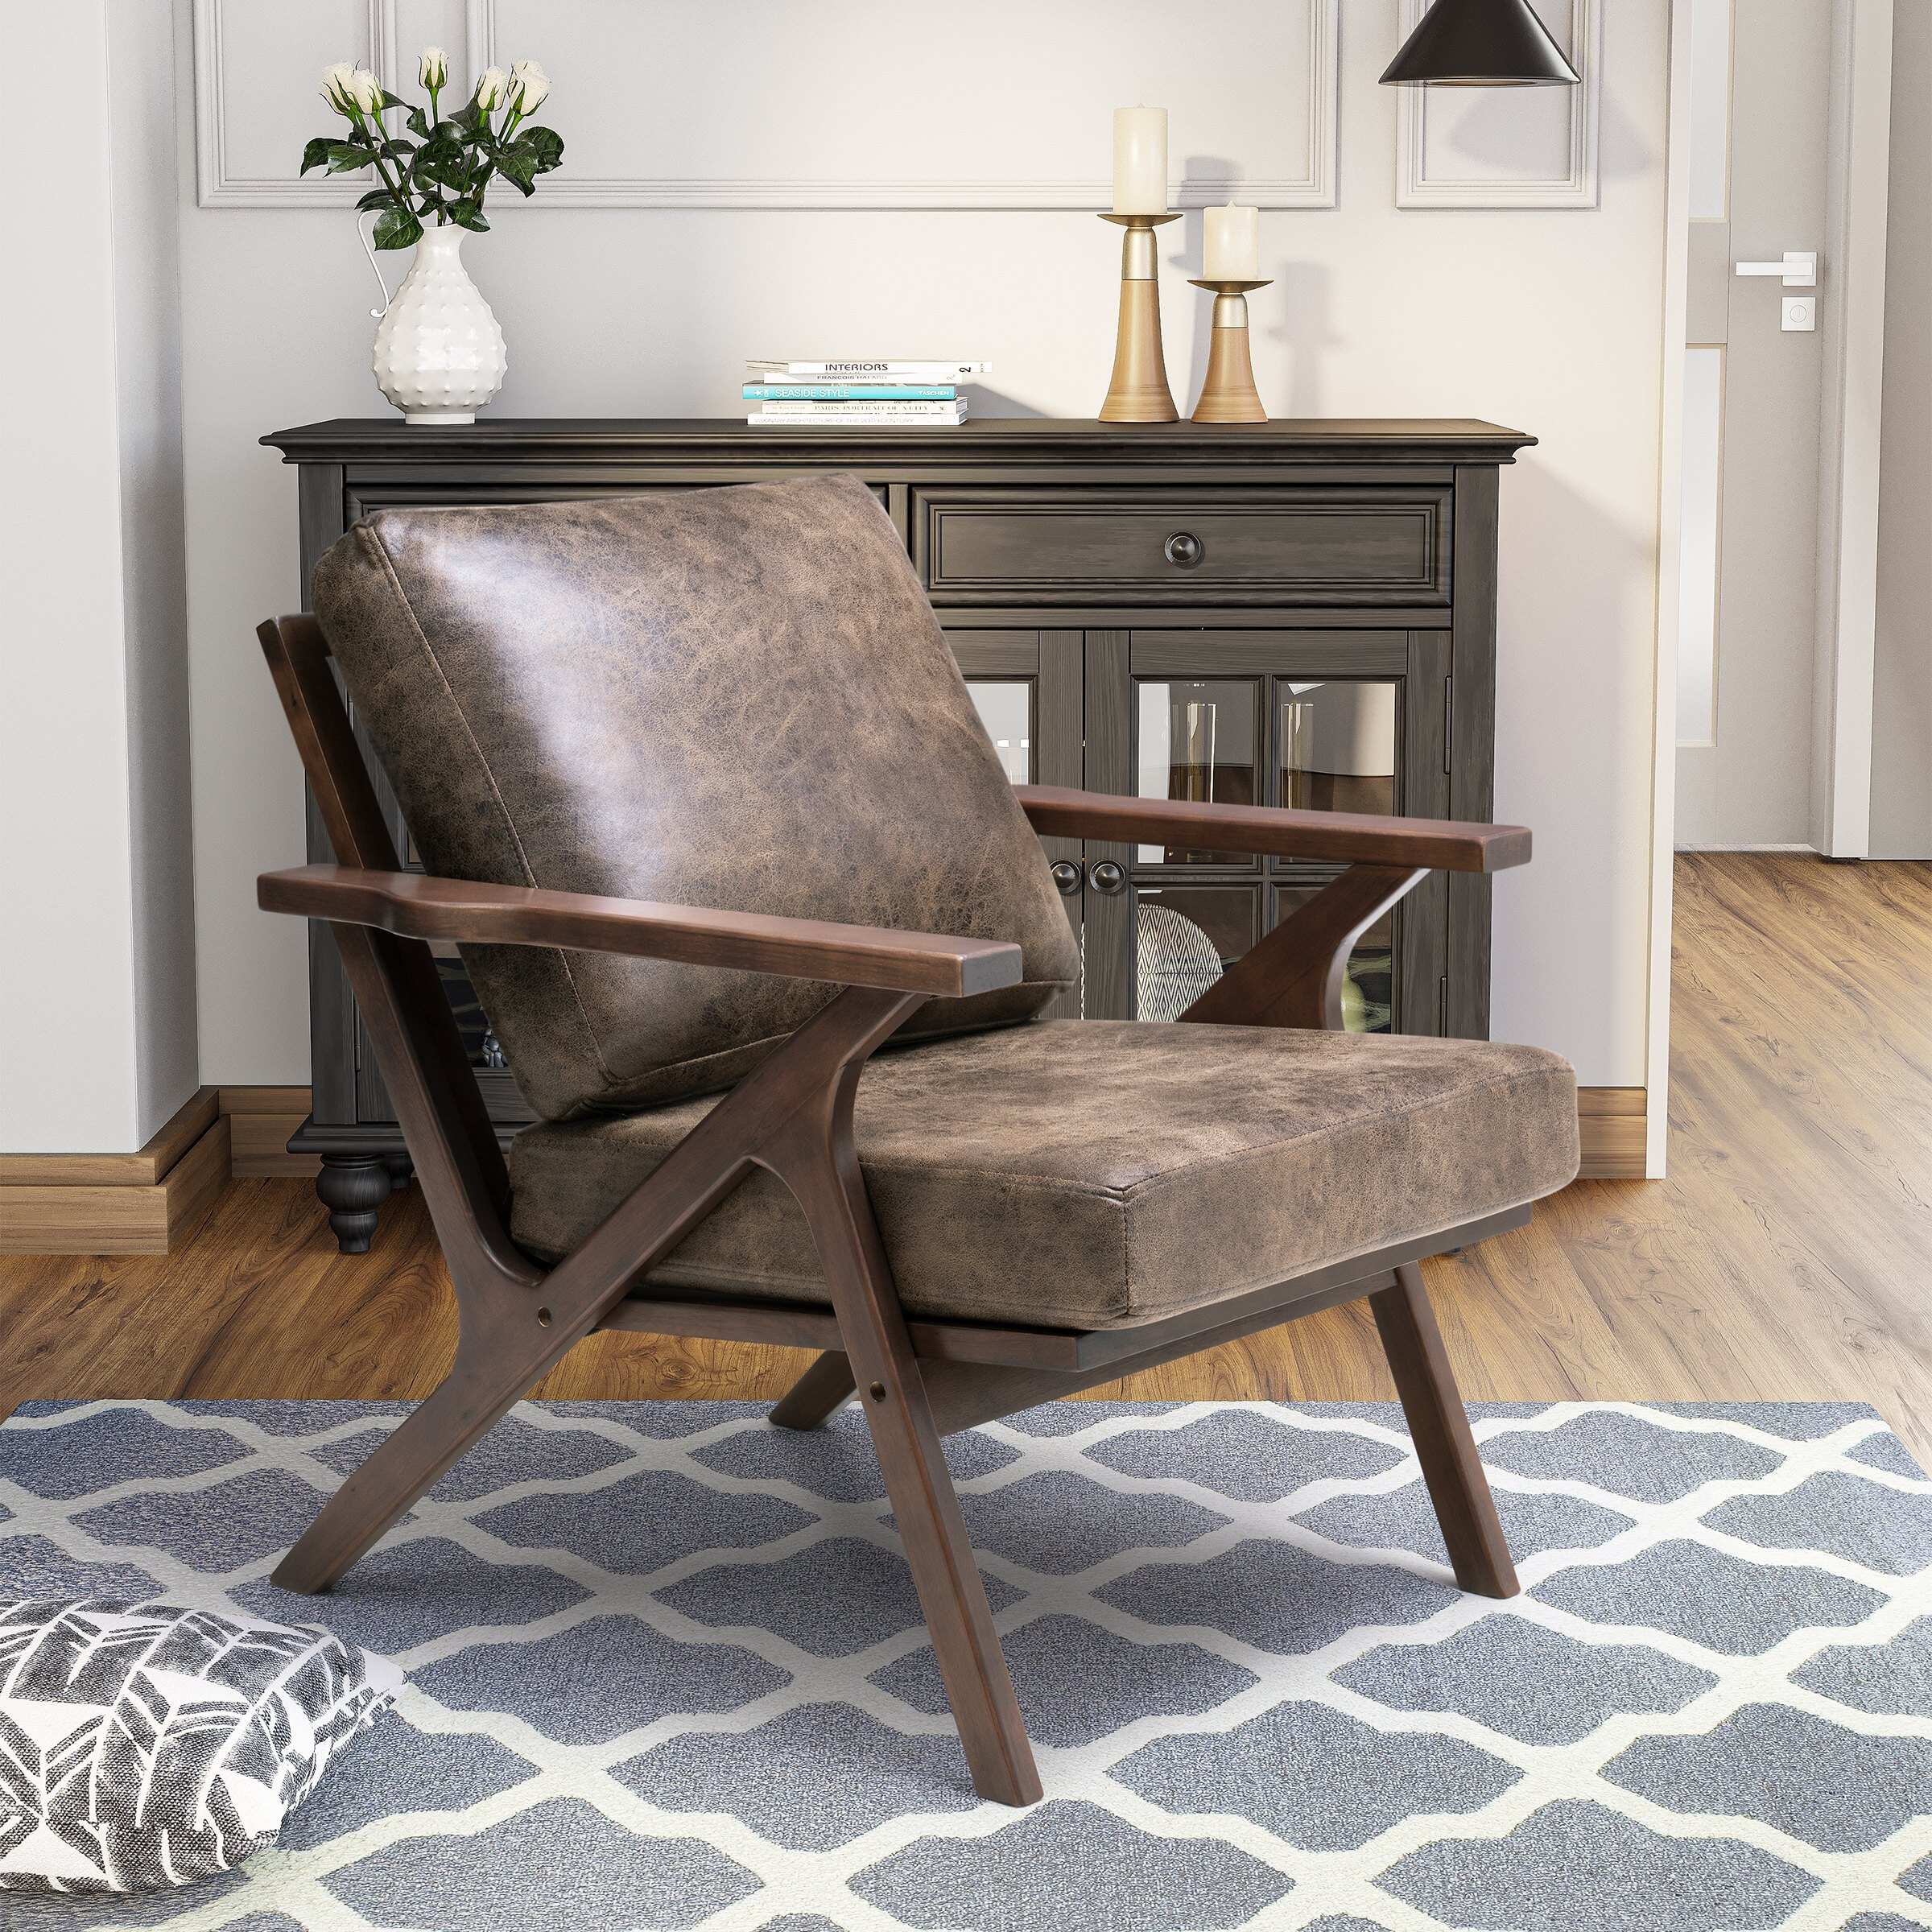 Pellebant Accent Armchair Mid Century Wooden Lounge Chair - 25"W x 30.31"D x 30.31"H